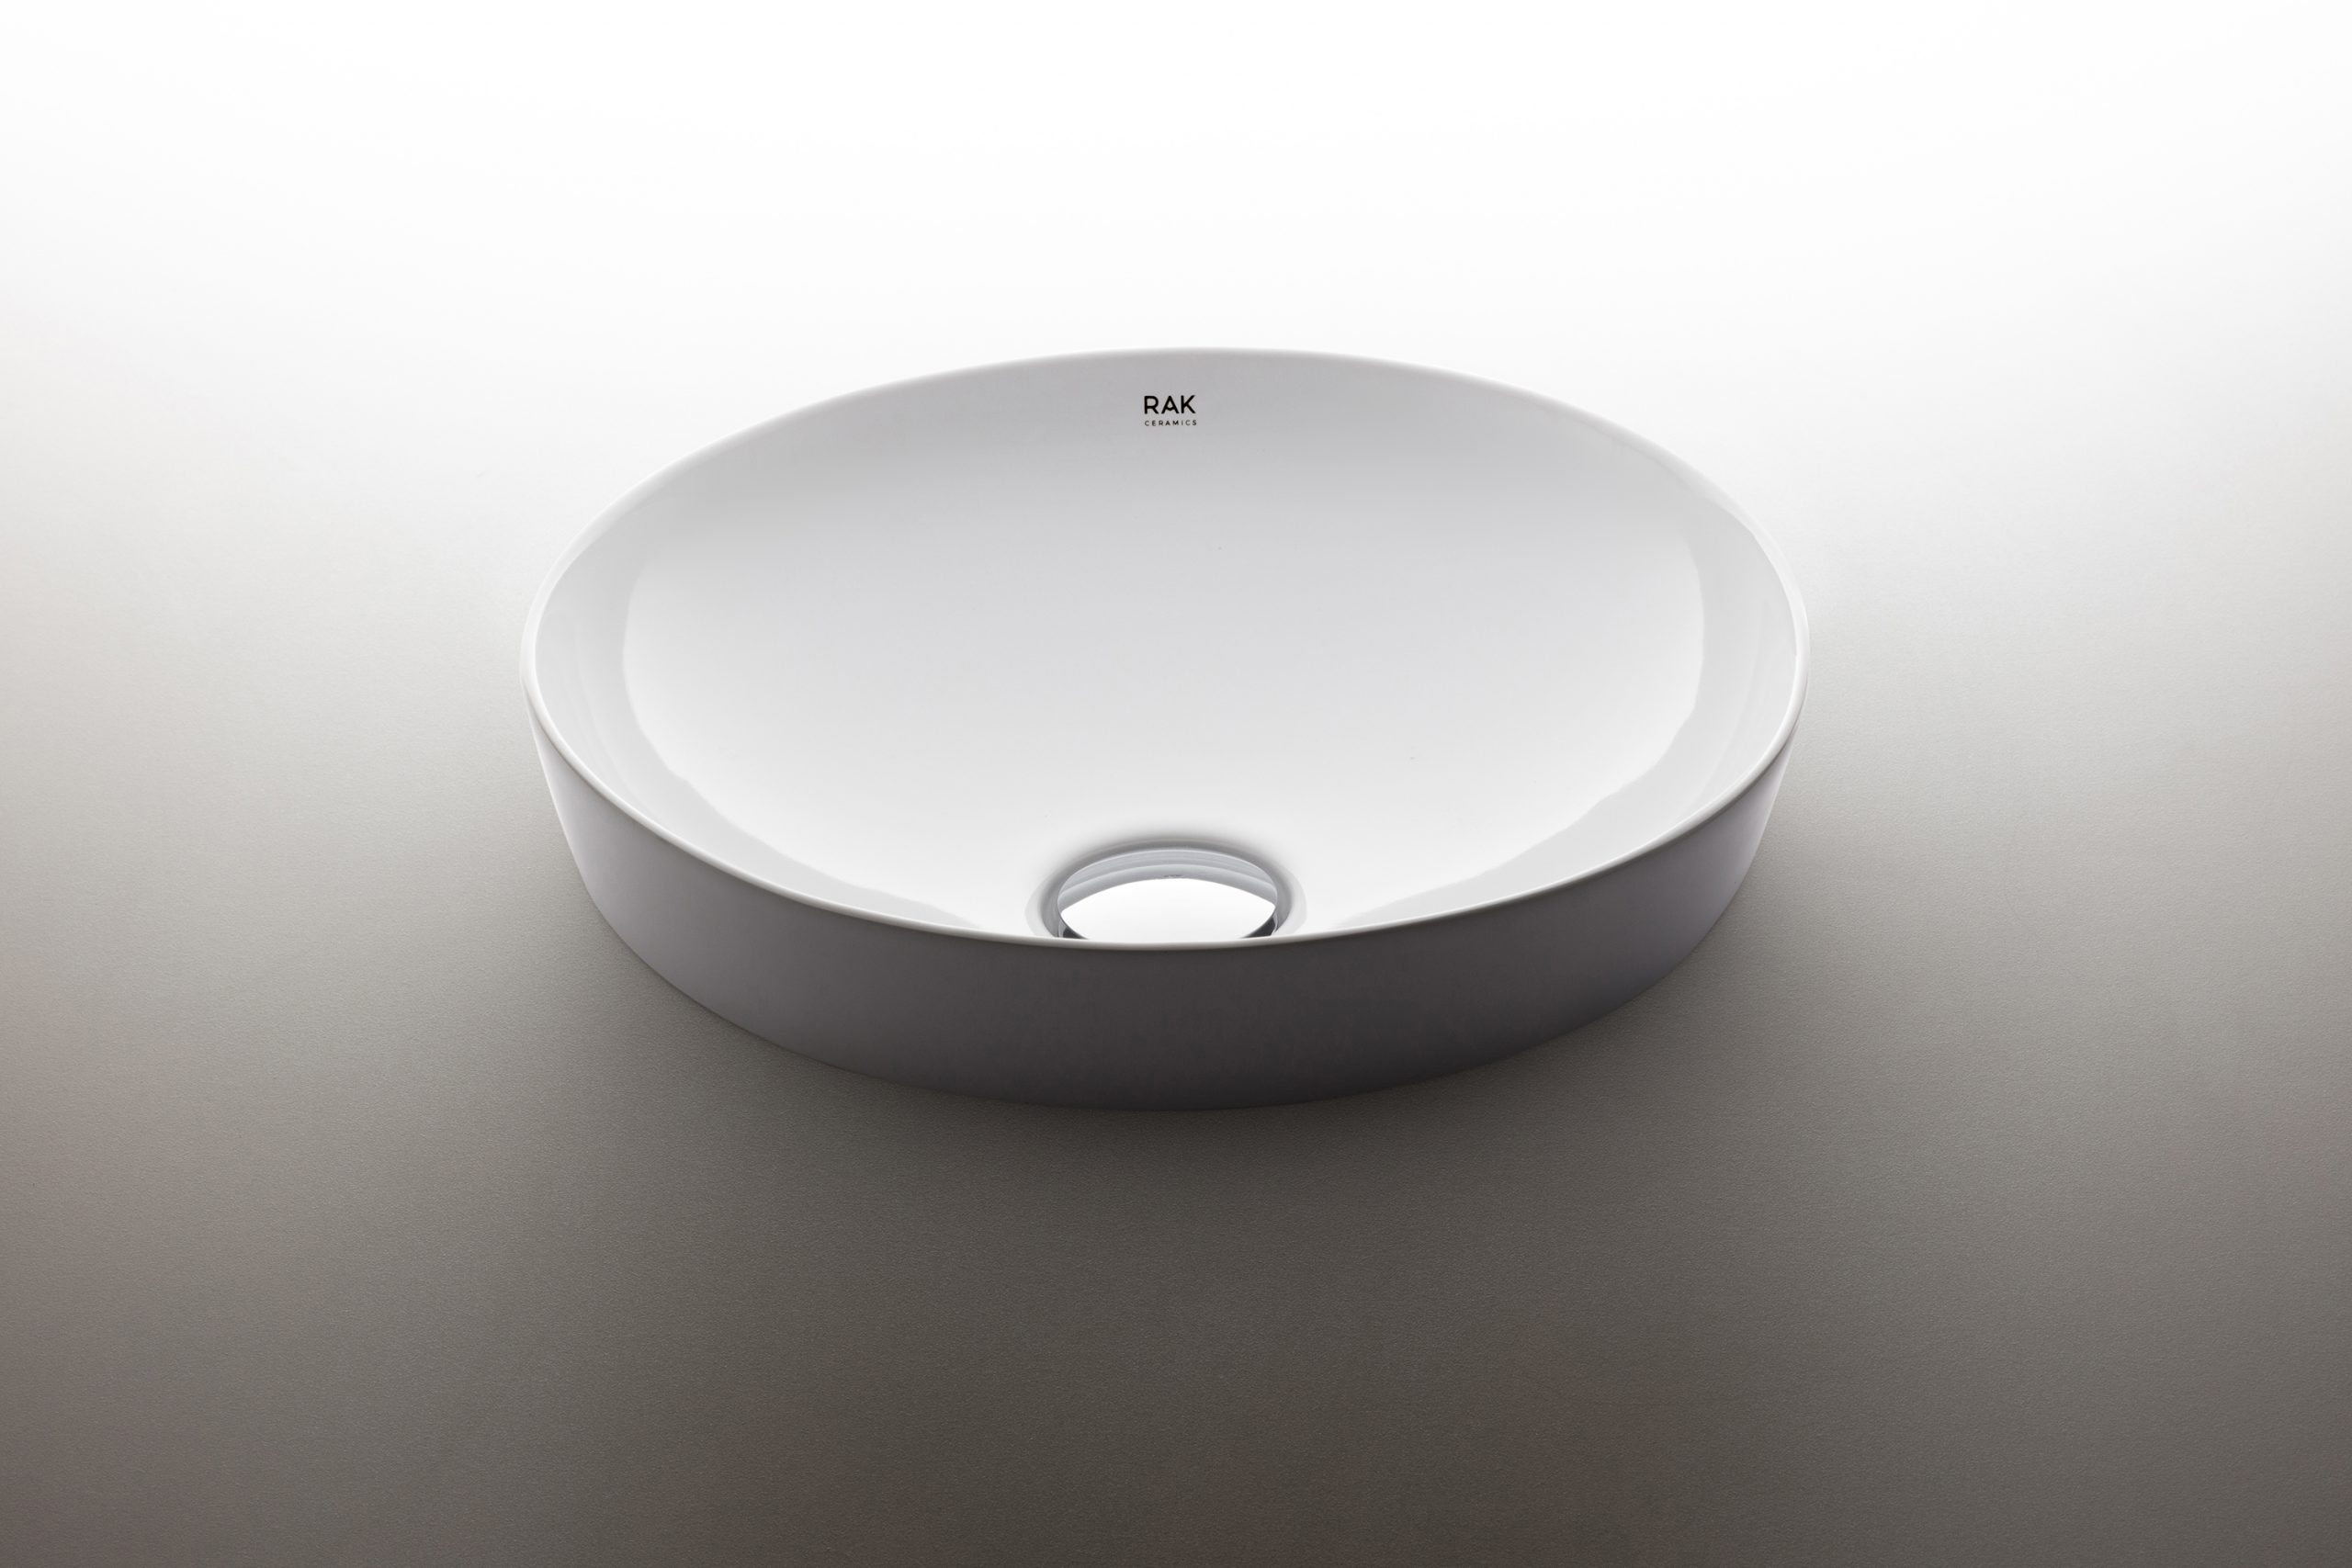 Semi built-in Round Variant washbasin designed by Debiasi Sandri for RAK Ceramics